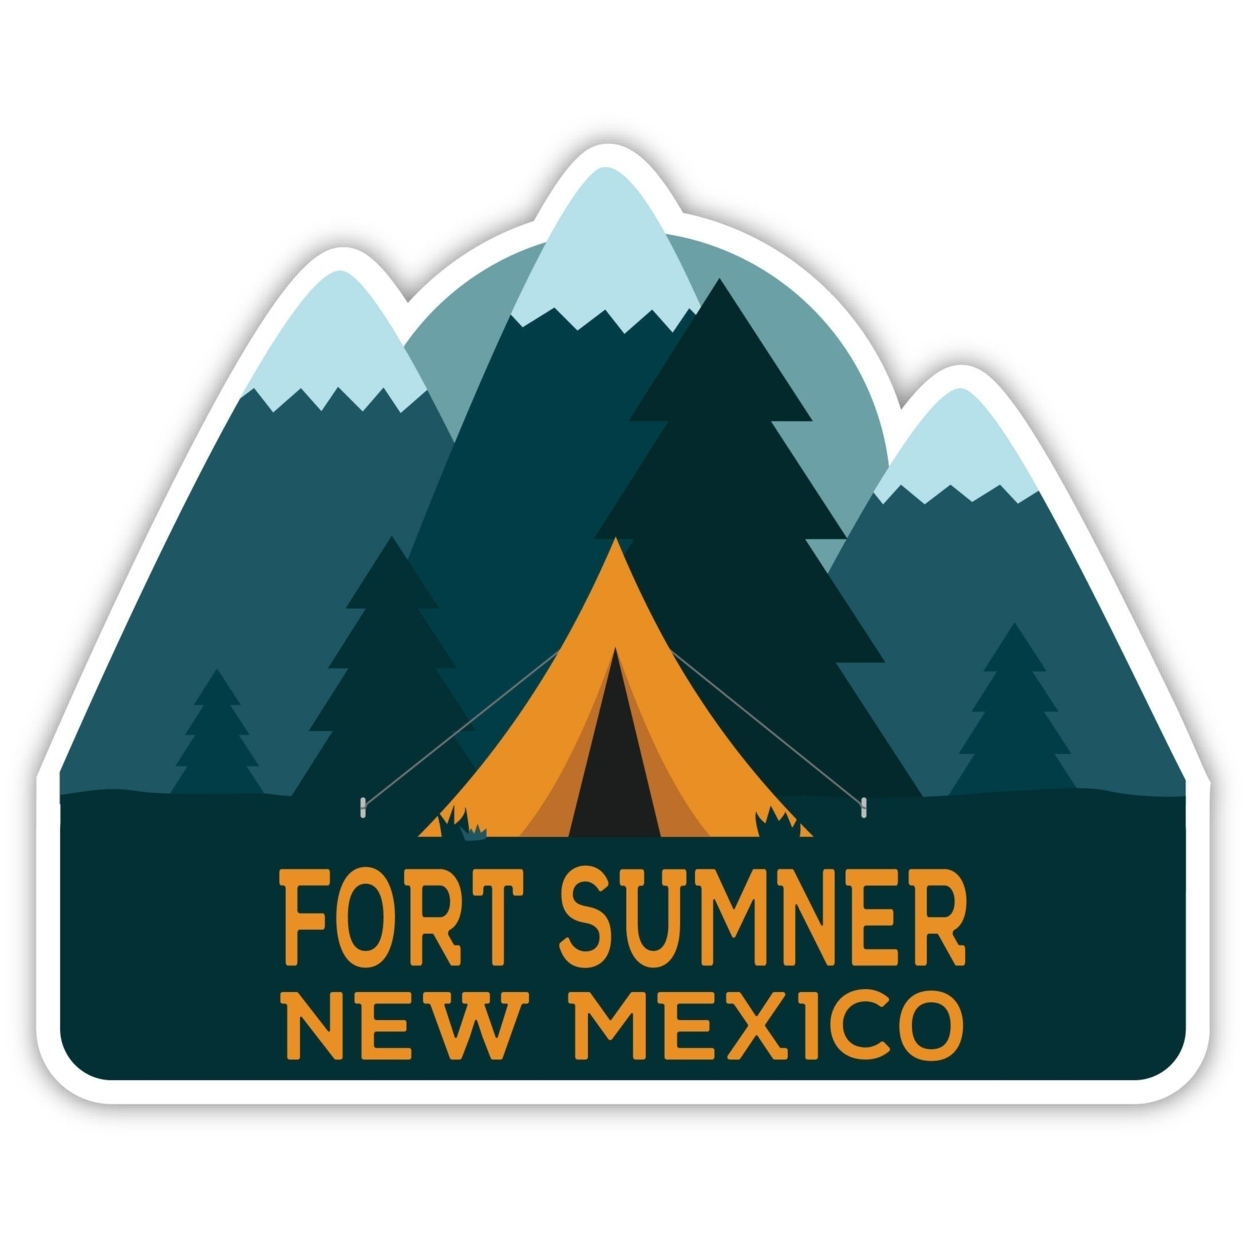 Fort Sumner New Mexico Souvenir Decorative Stickers (Choose Theme And Size) - Single Unit, 6-Inch, Tent